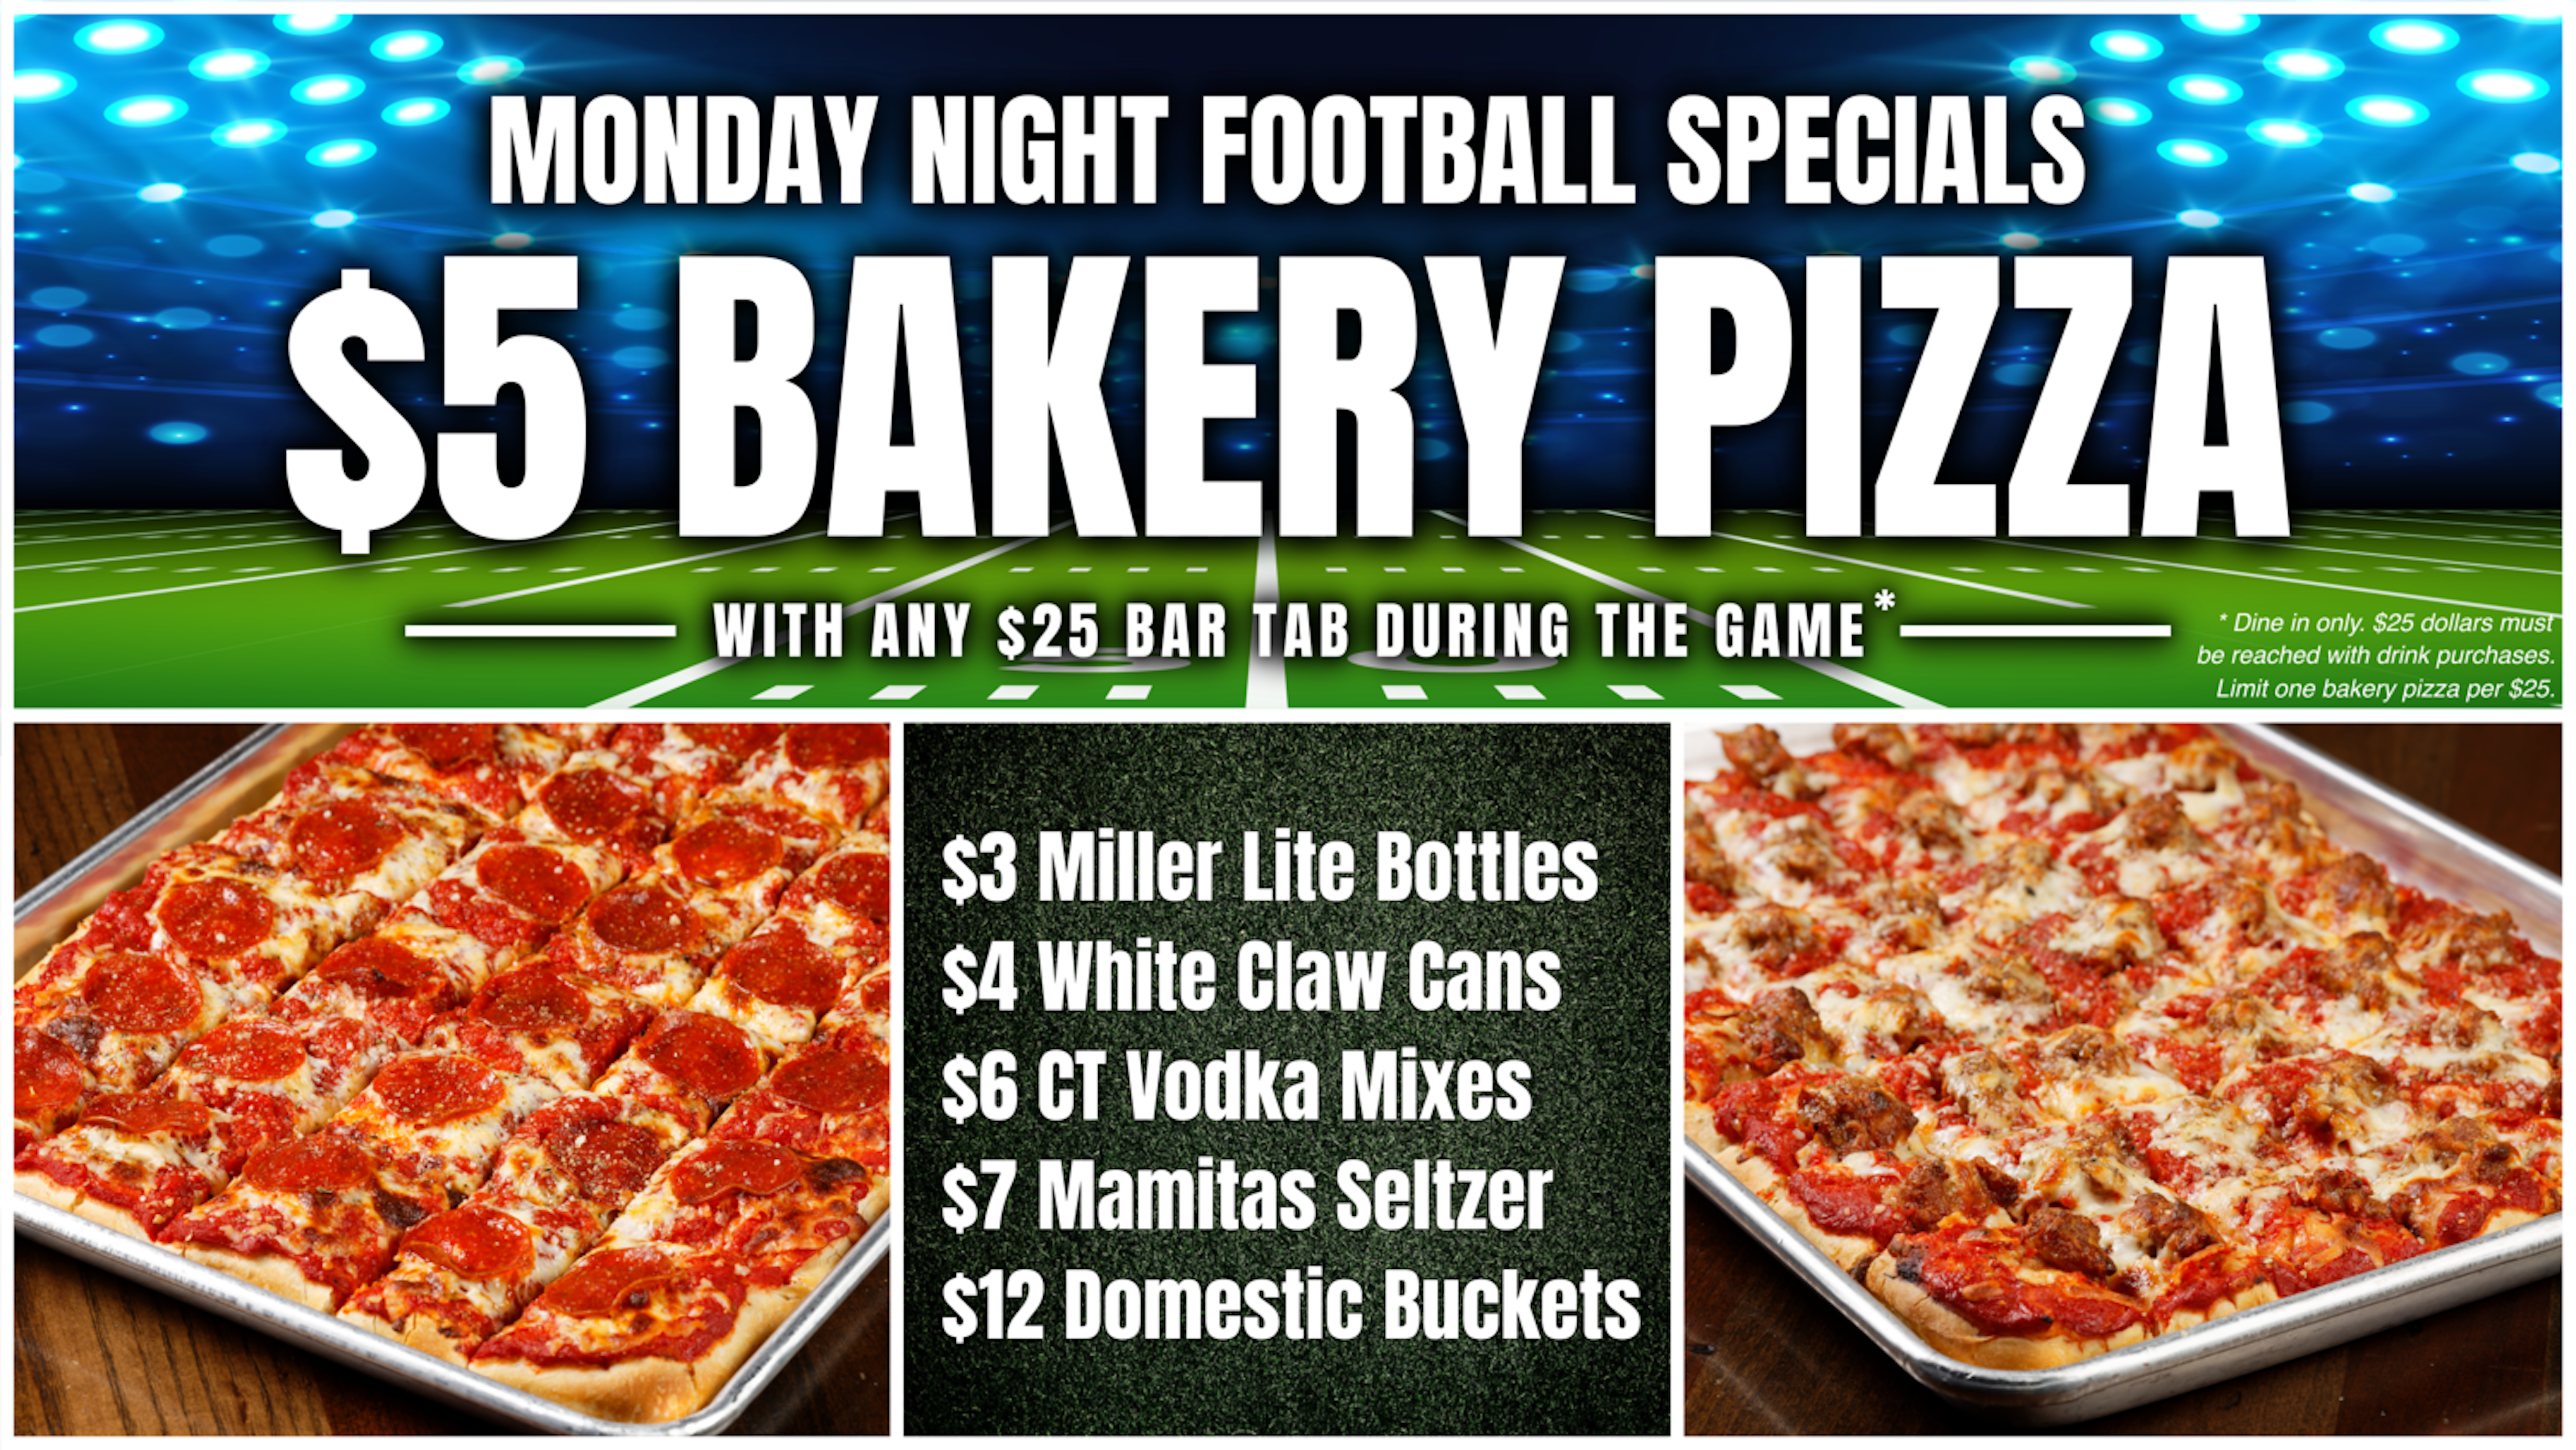 $5 Bakery Pizza on Monday